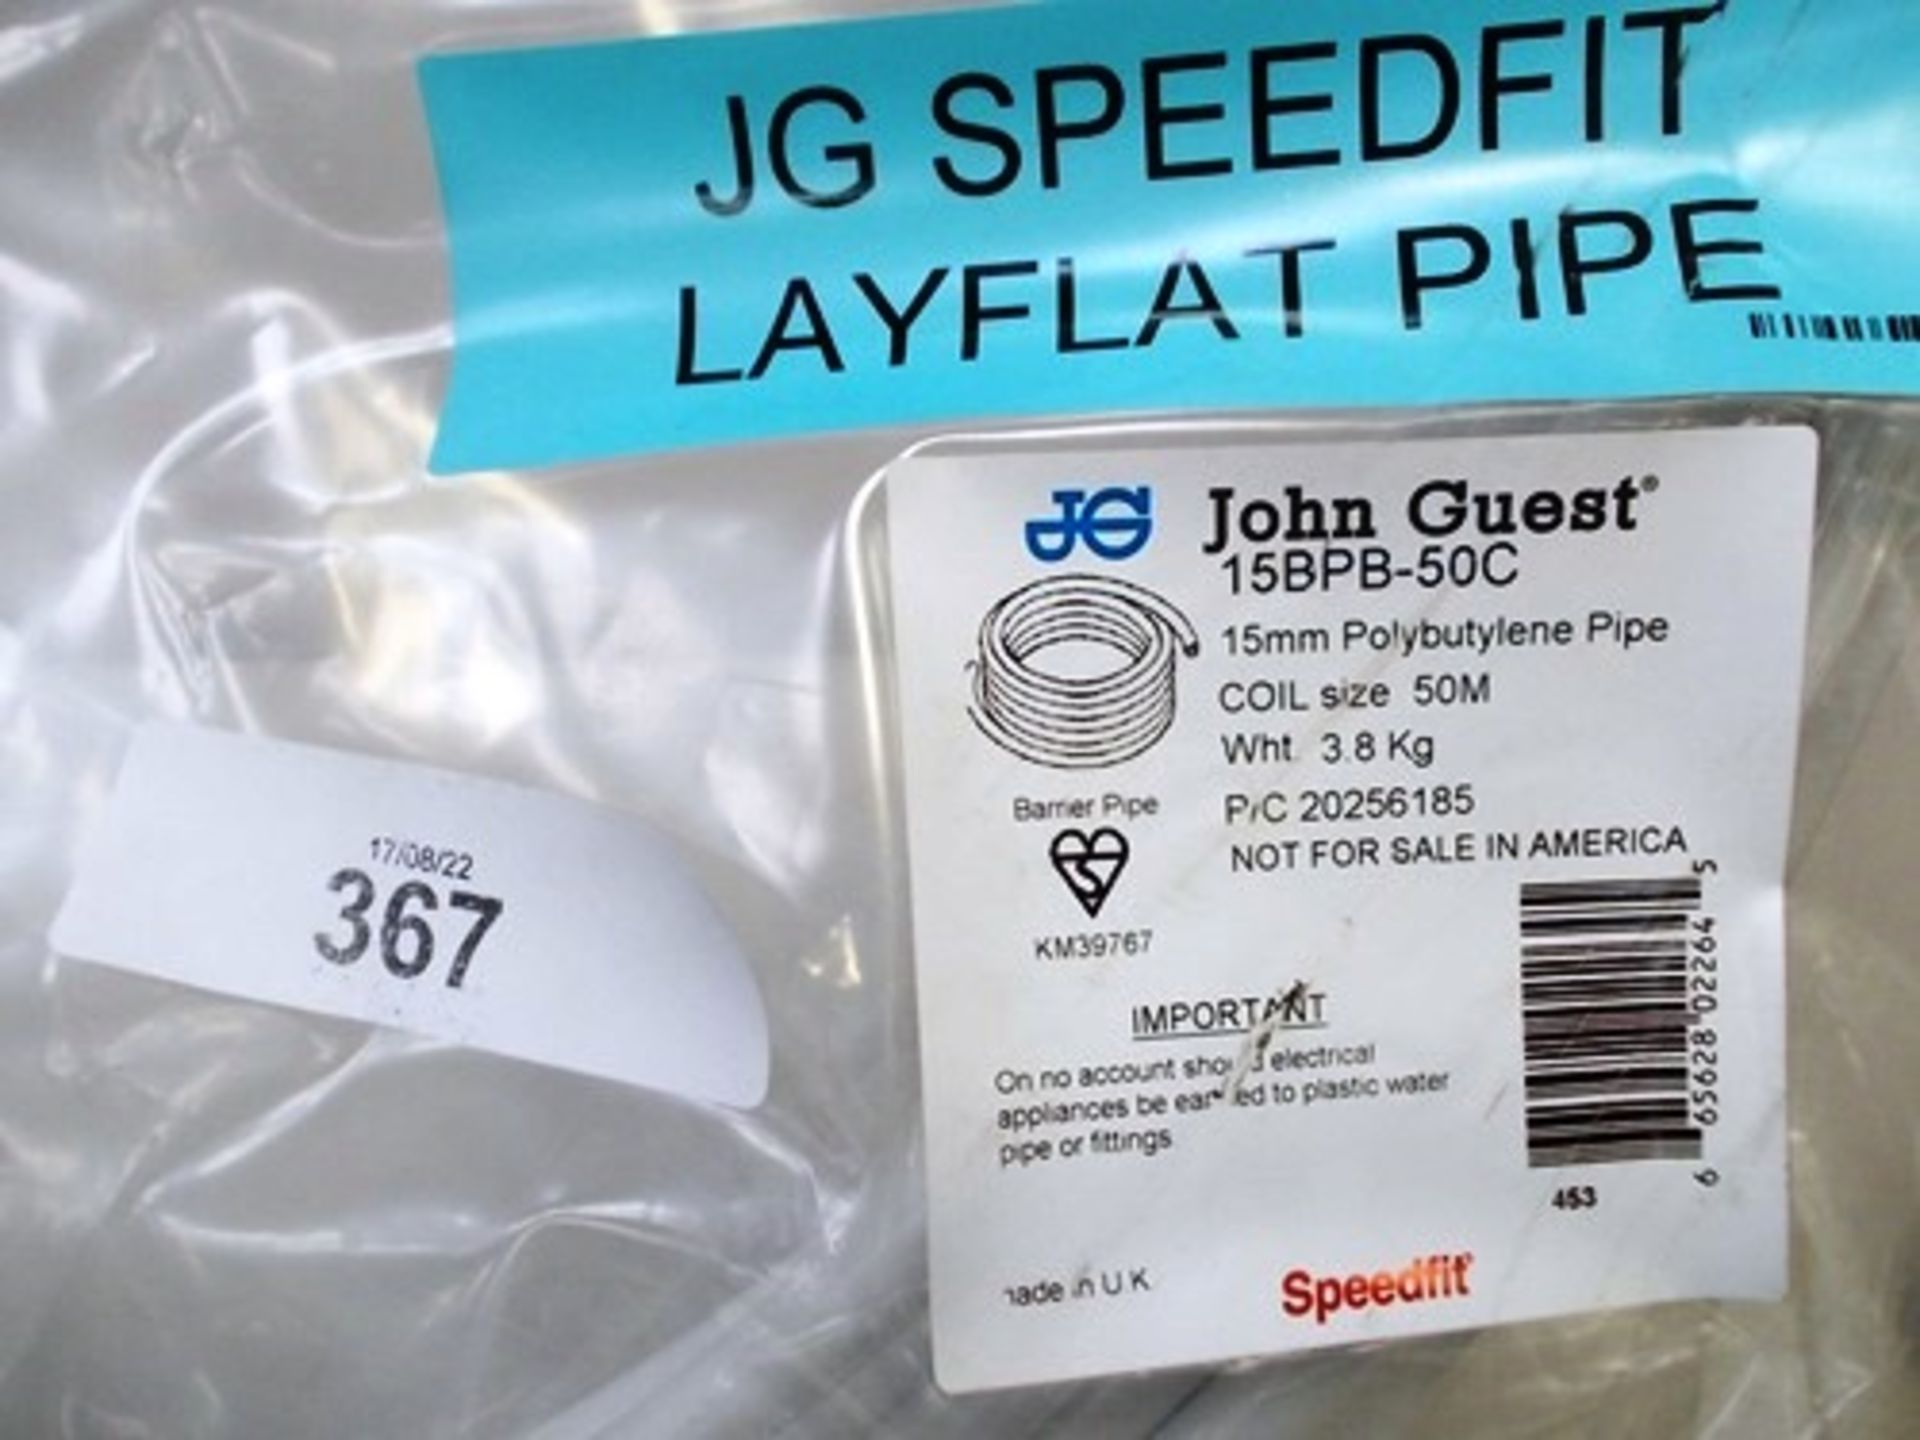 5 x JG Speedfit lay flat pipe, 15mm polybutylene pip coil, size 50m, P/C 20256185 (15BPB-50C) -